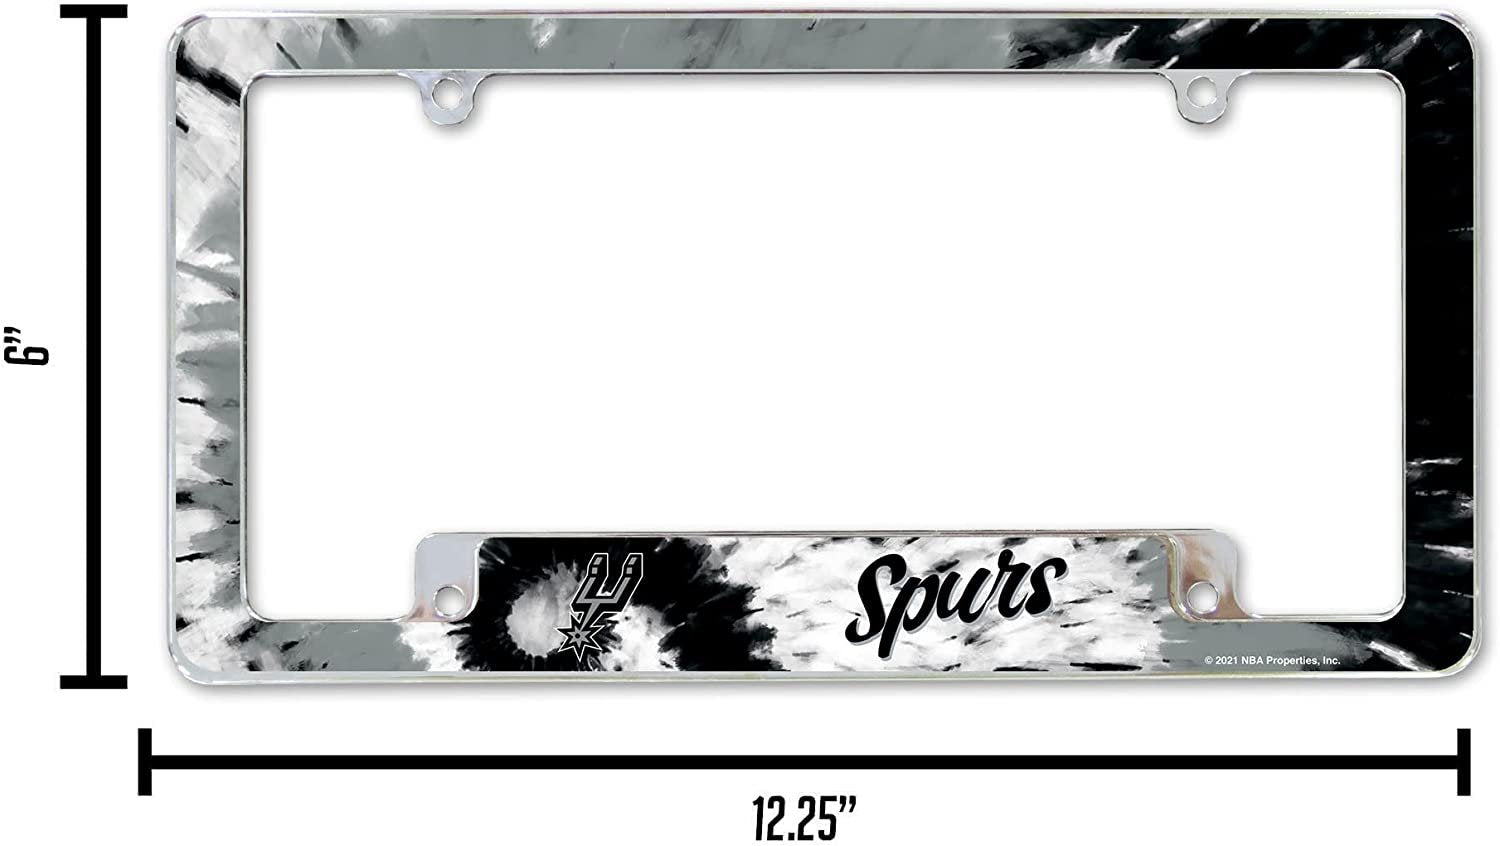 San Antonio Spurs Metal License Plate Frame Chrome Tag Cover Tie Dye Design 6x12 Inch